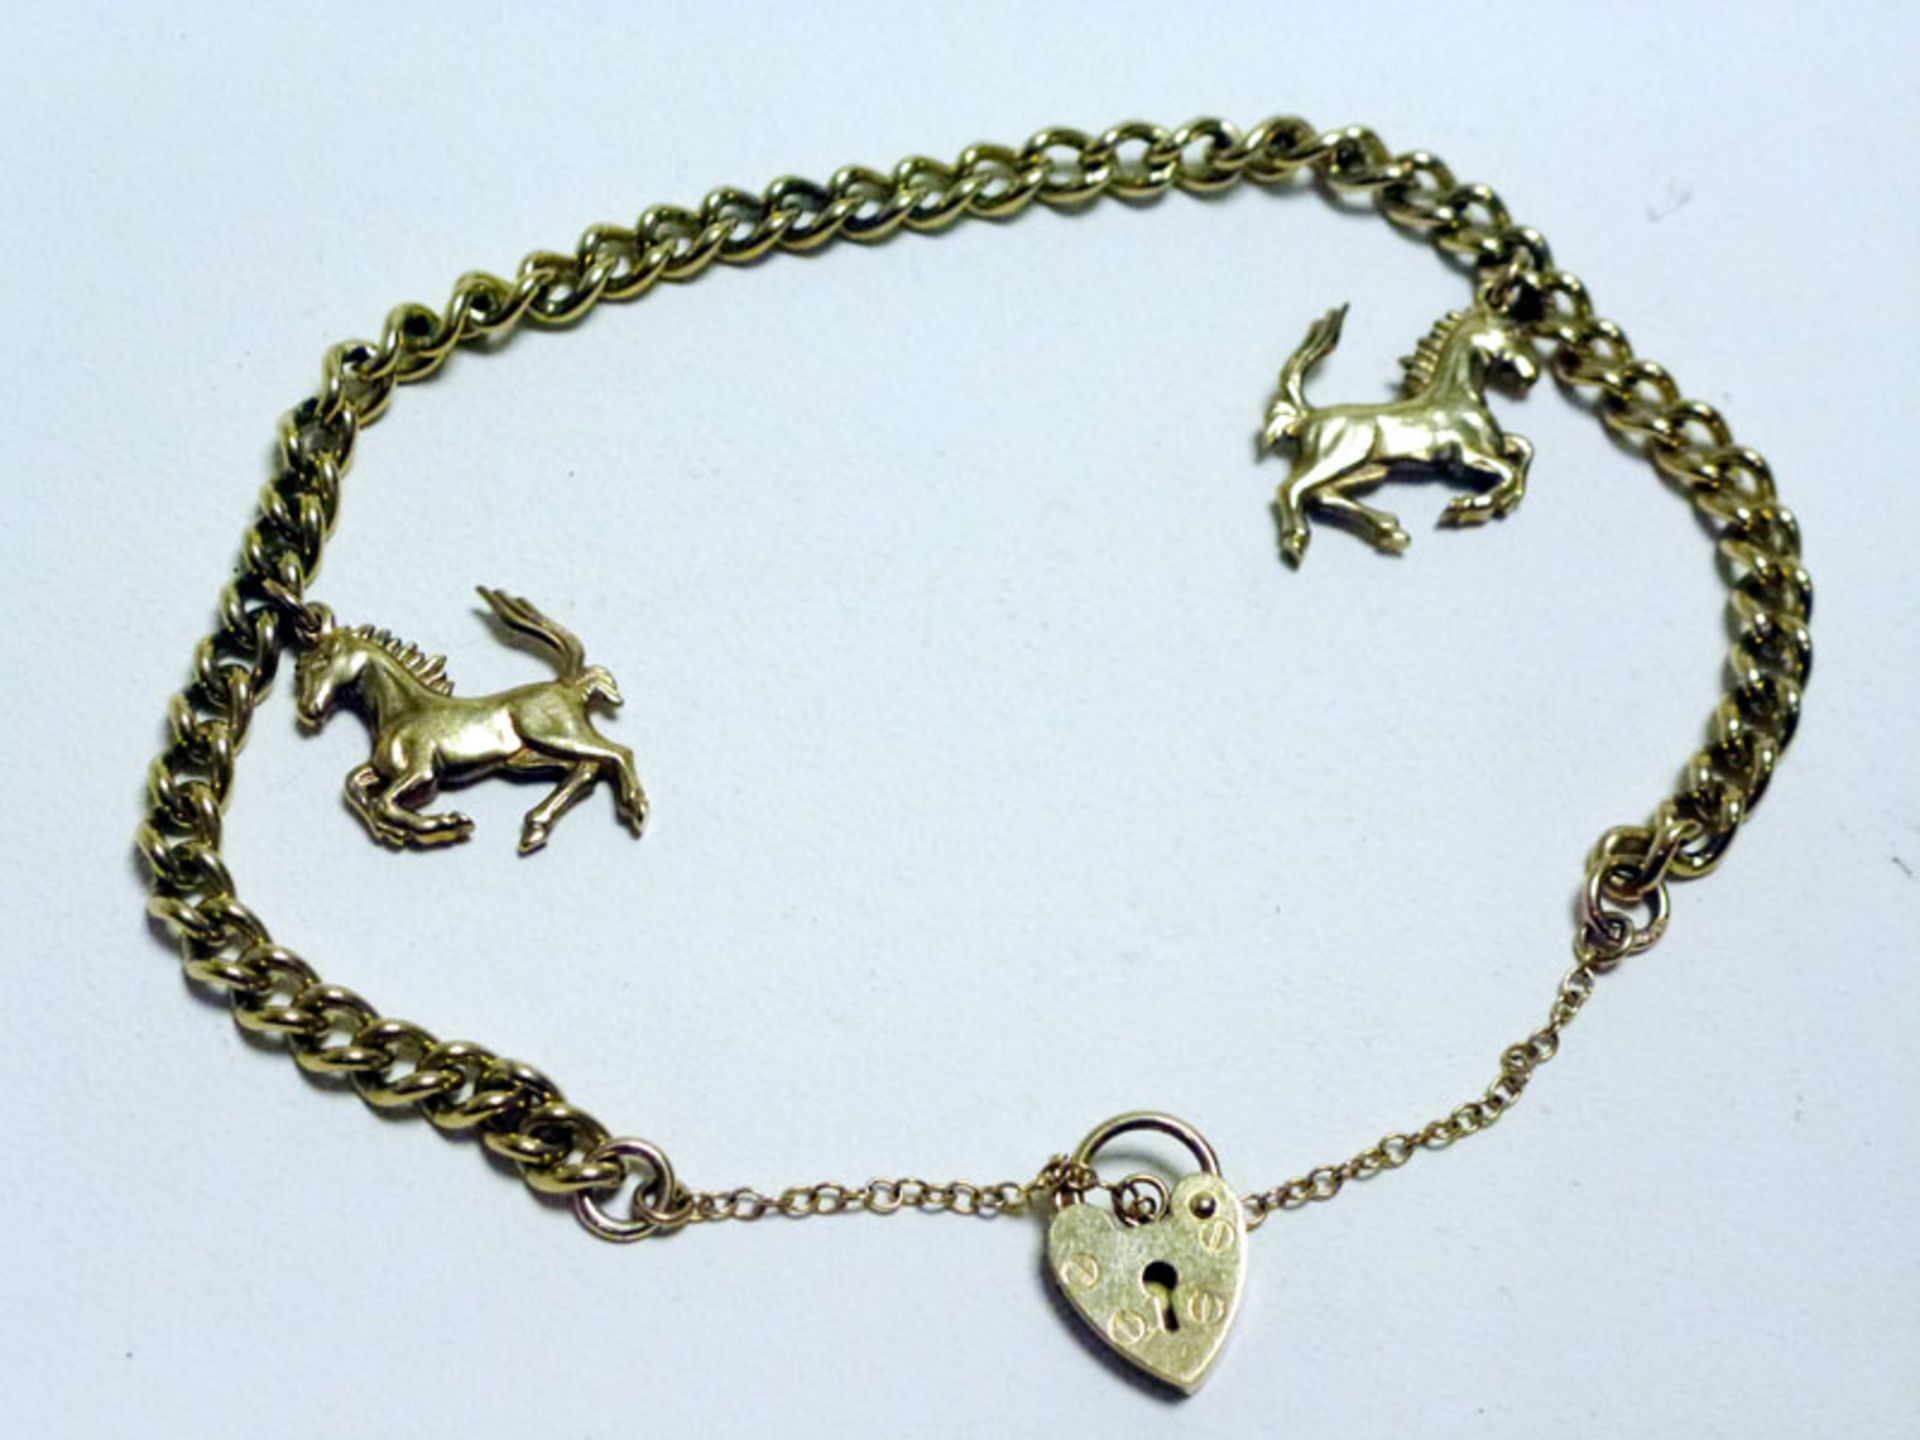 A Solid Gold Ferrari 'Prancing Horse' Charm Bracelet